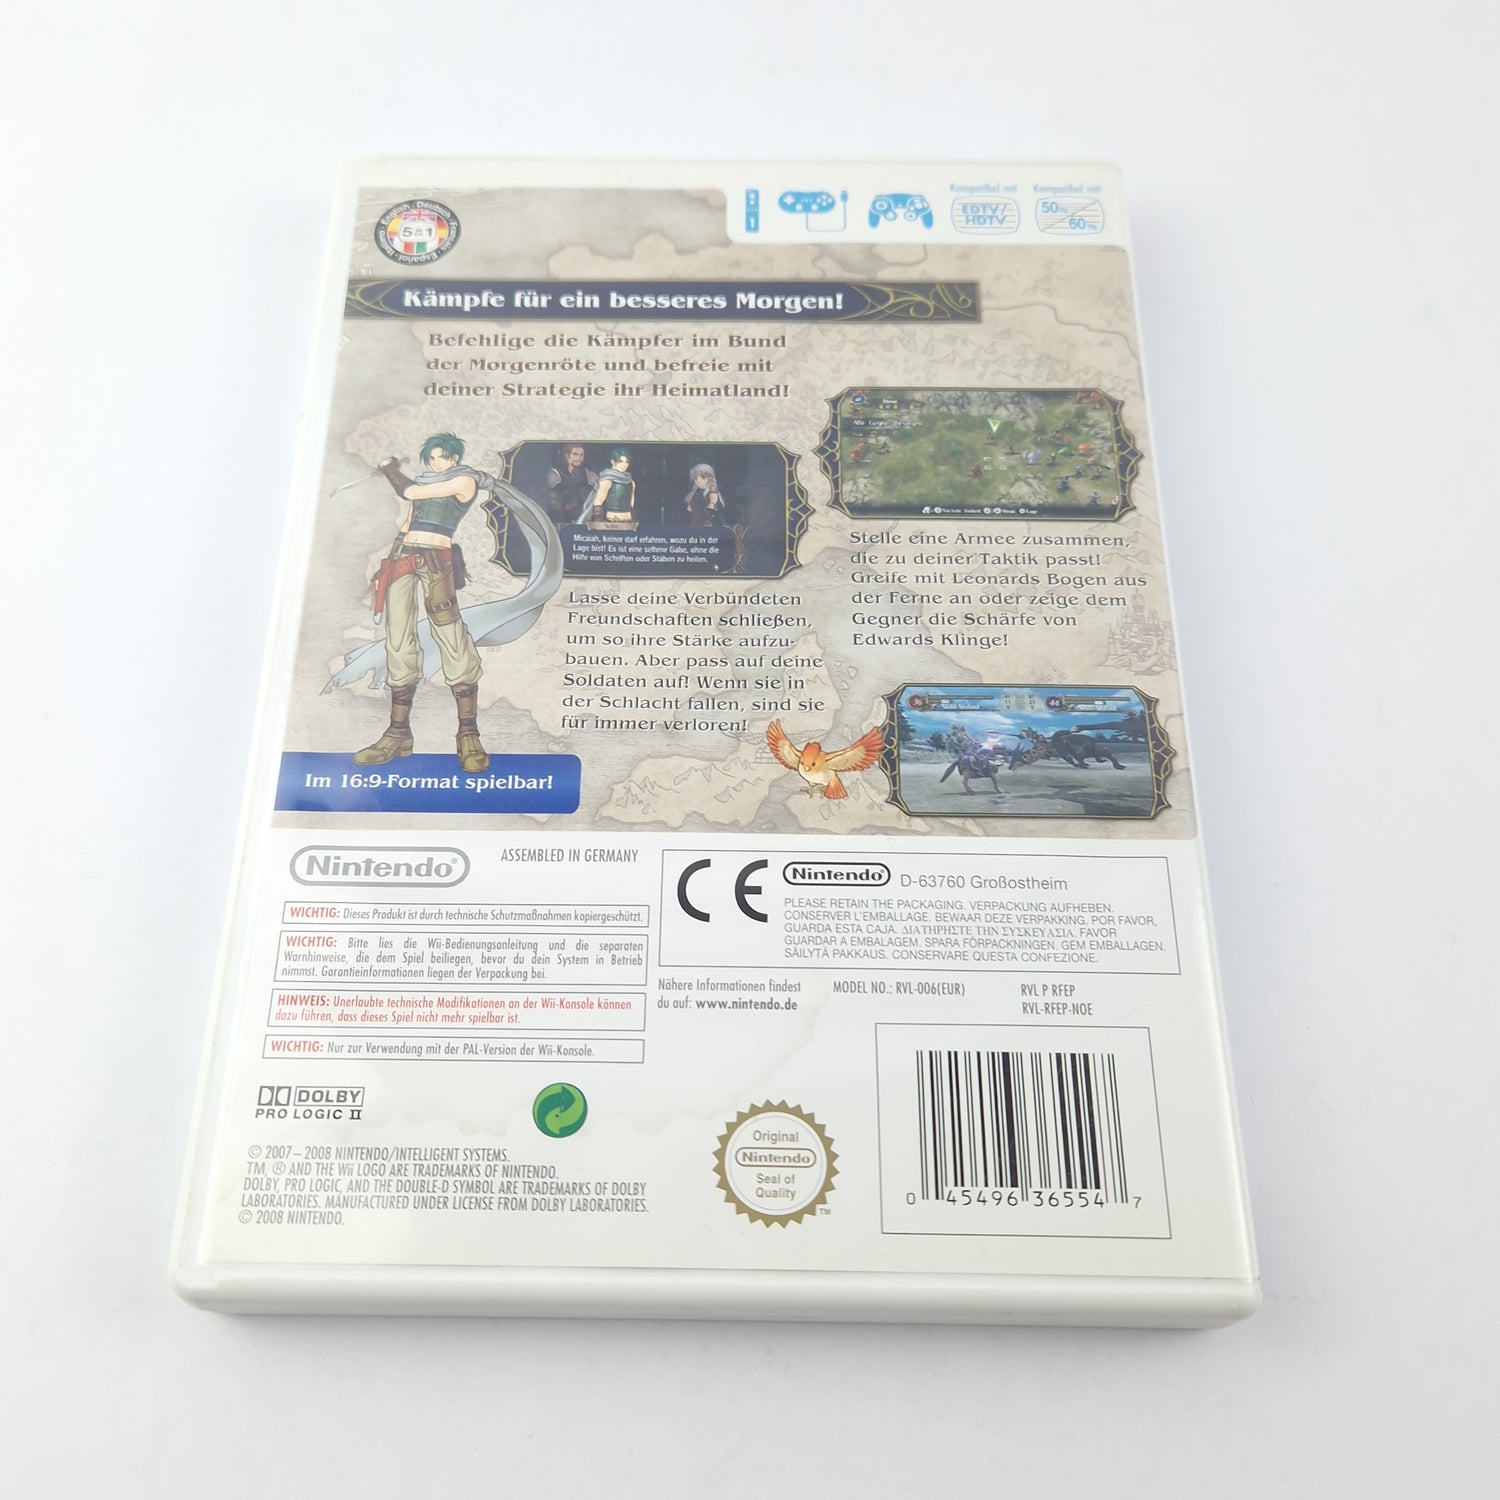 Nintendo Wii game: Fire Emblem Radiant Dawn + Prima Game Guide - OVP PAL